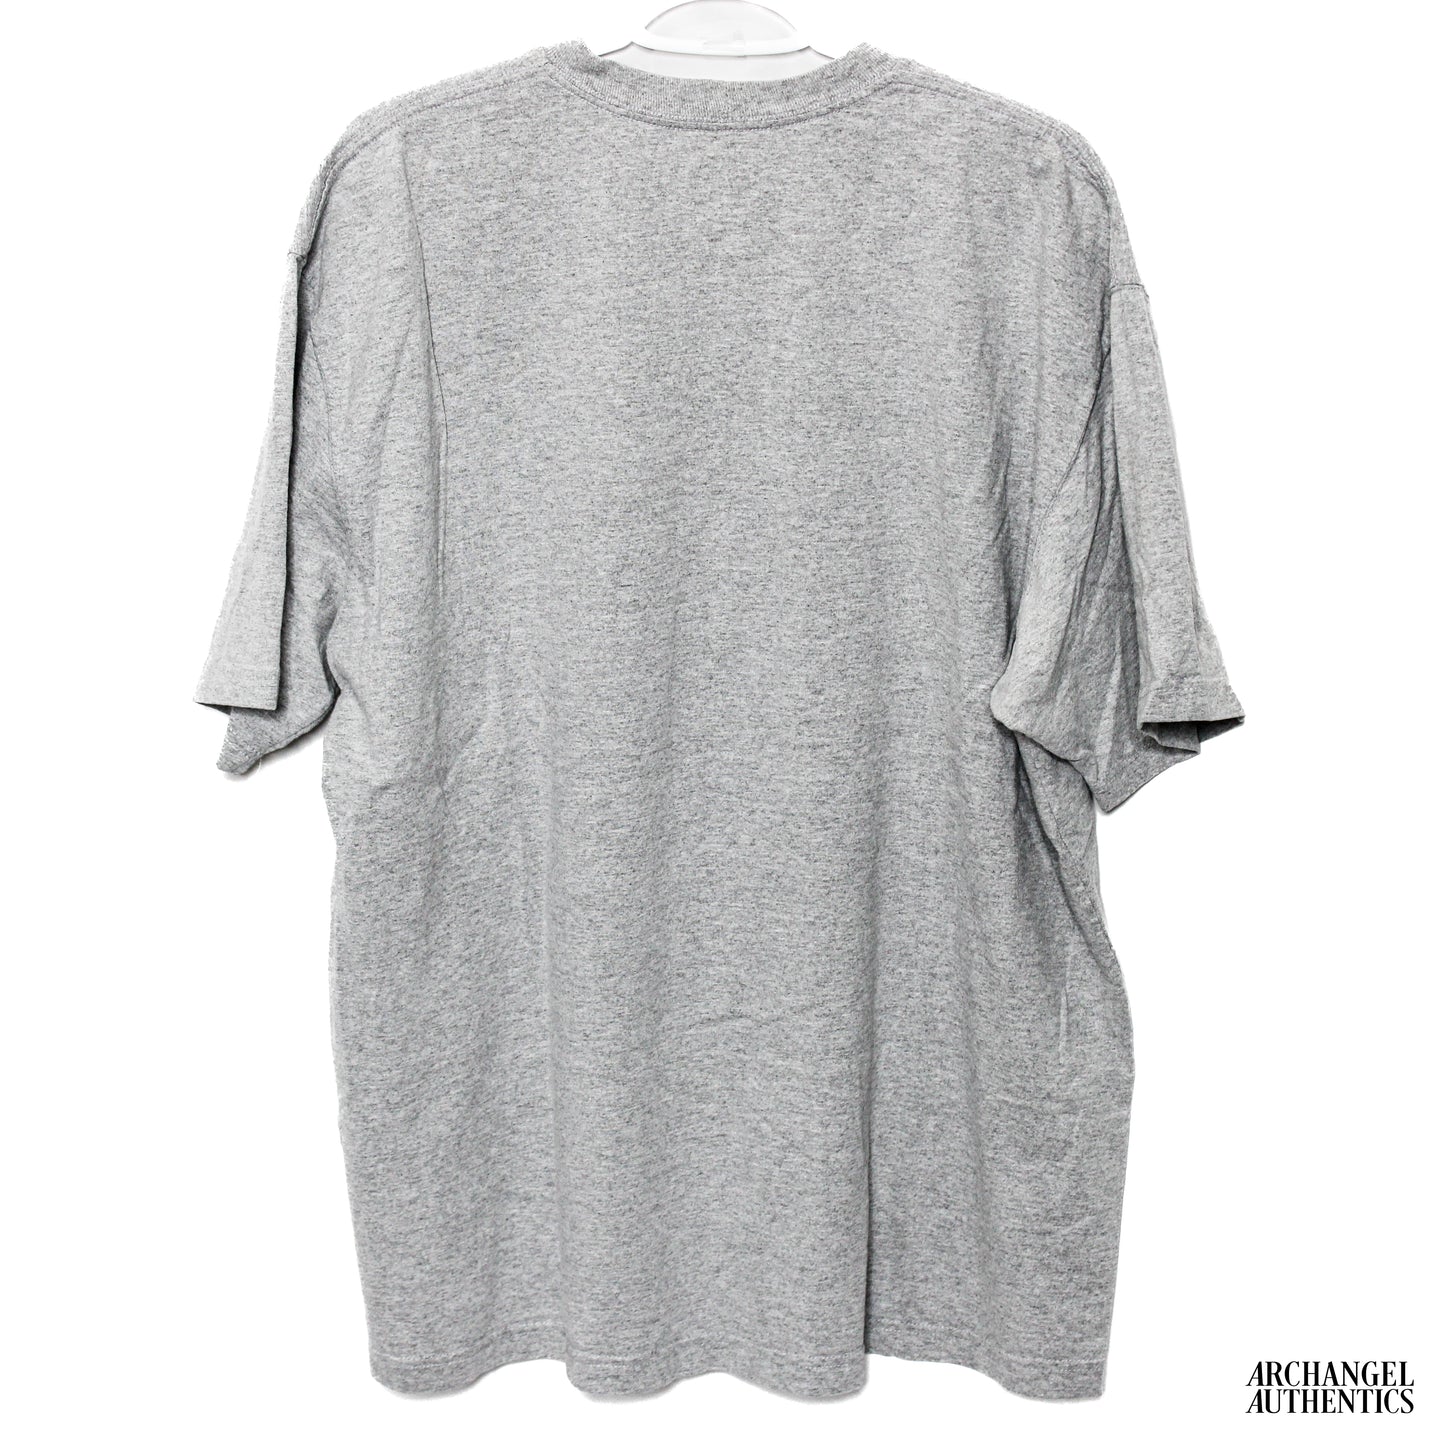 Carhartt Pocket T-Shirt Original Fit Light Grey